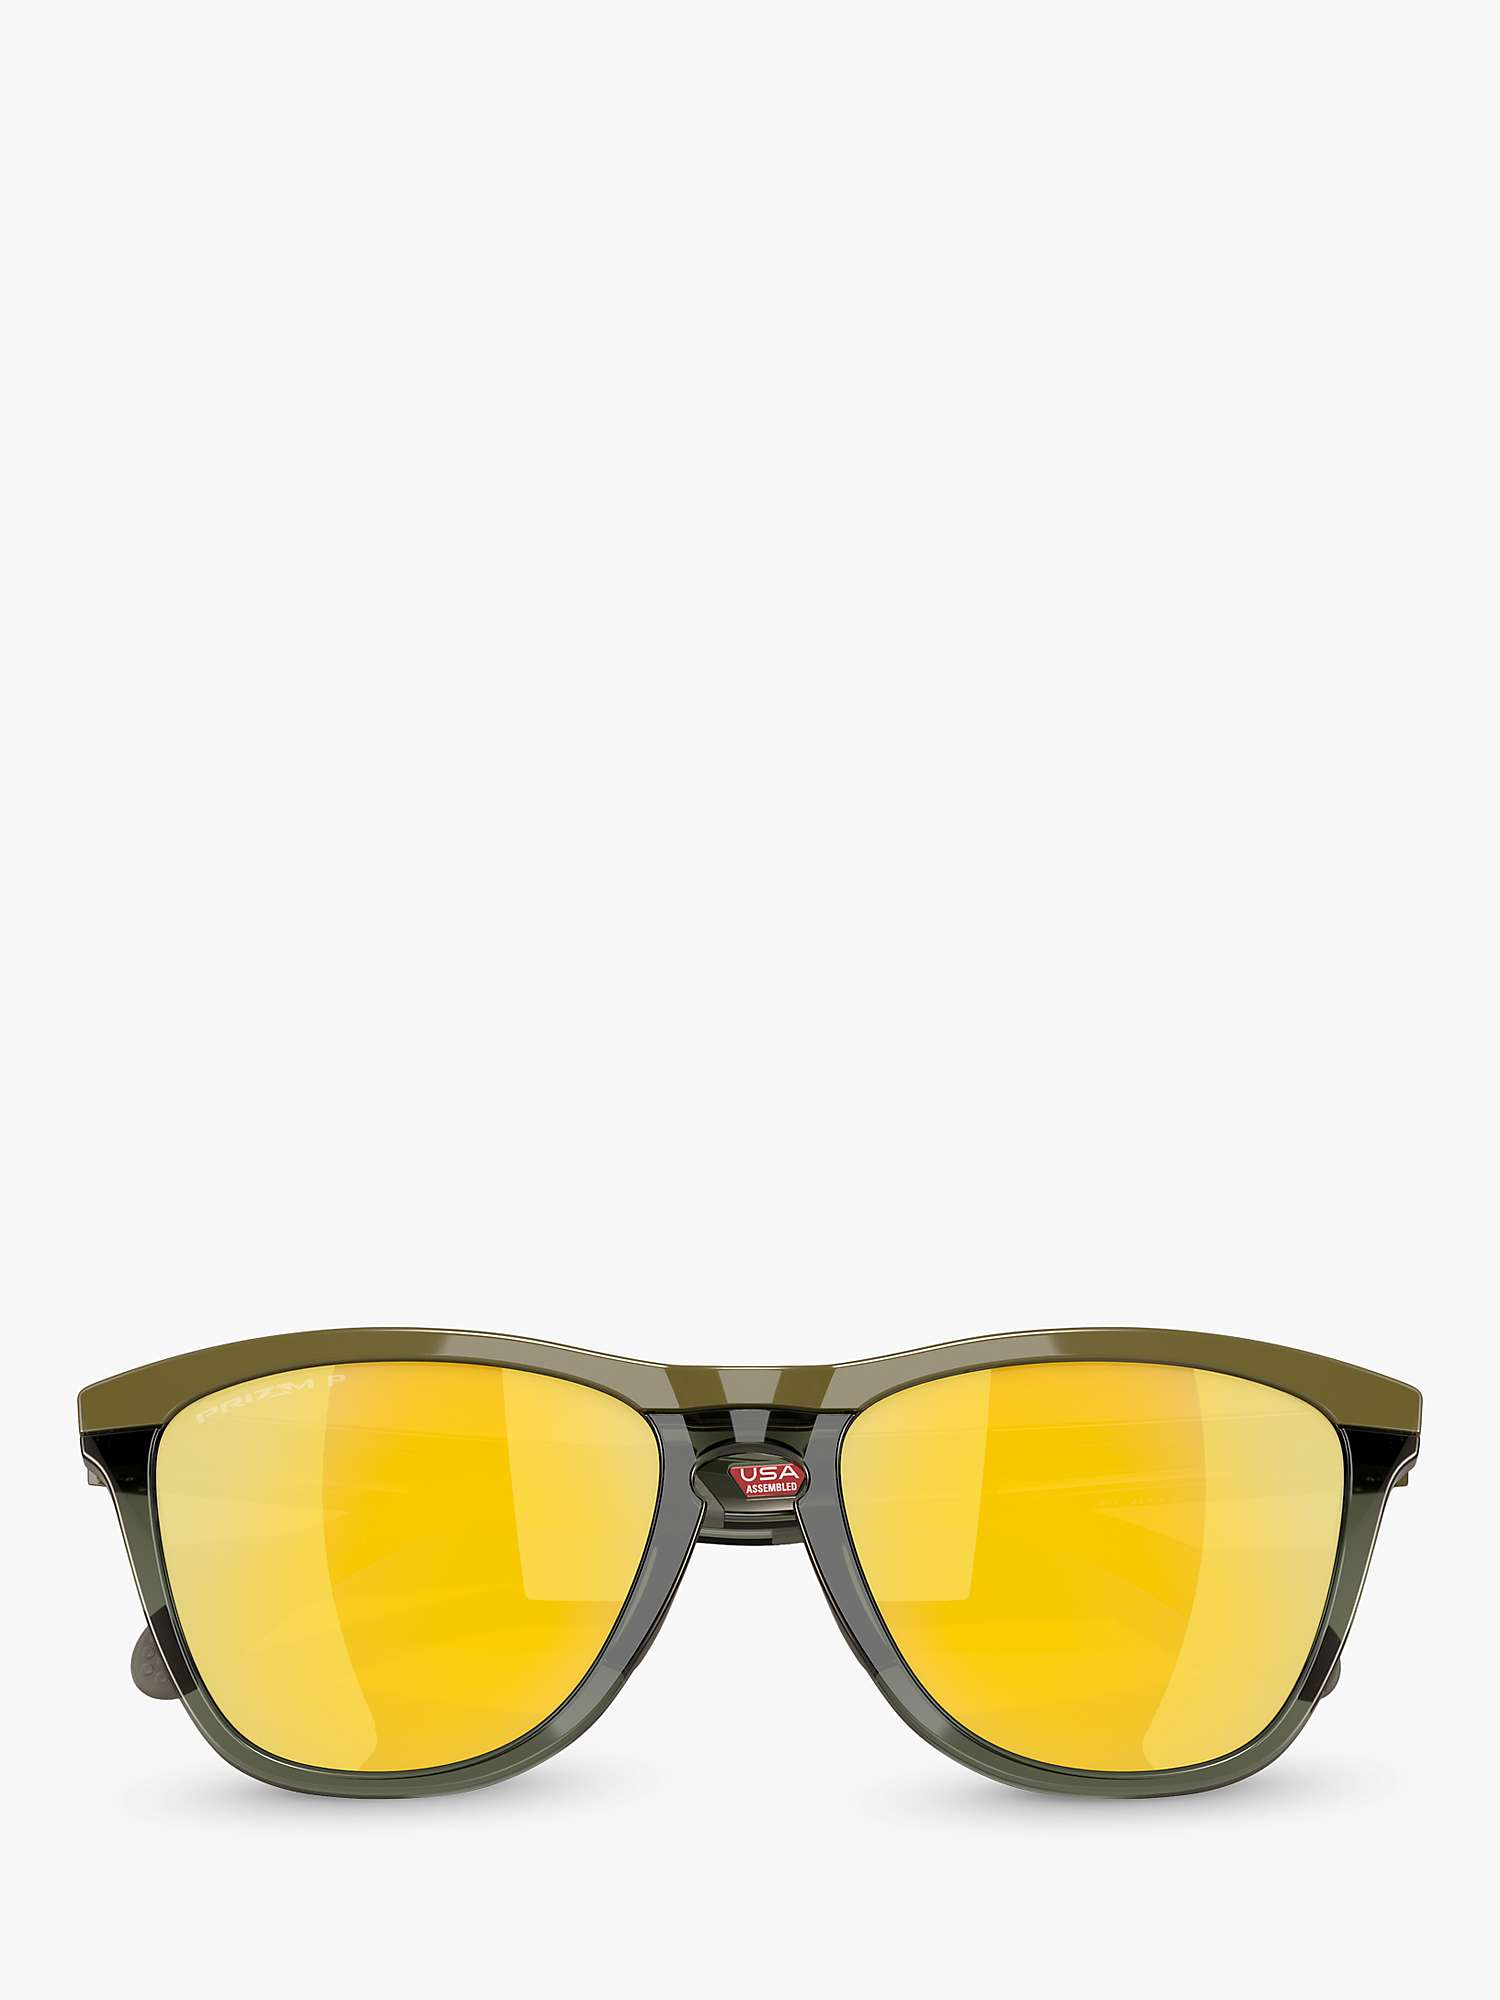 Buy Oakley OO9284 Men's Frogskins Sunglasses, Olive Ink/Dark Brush Online at johnlewis.com